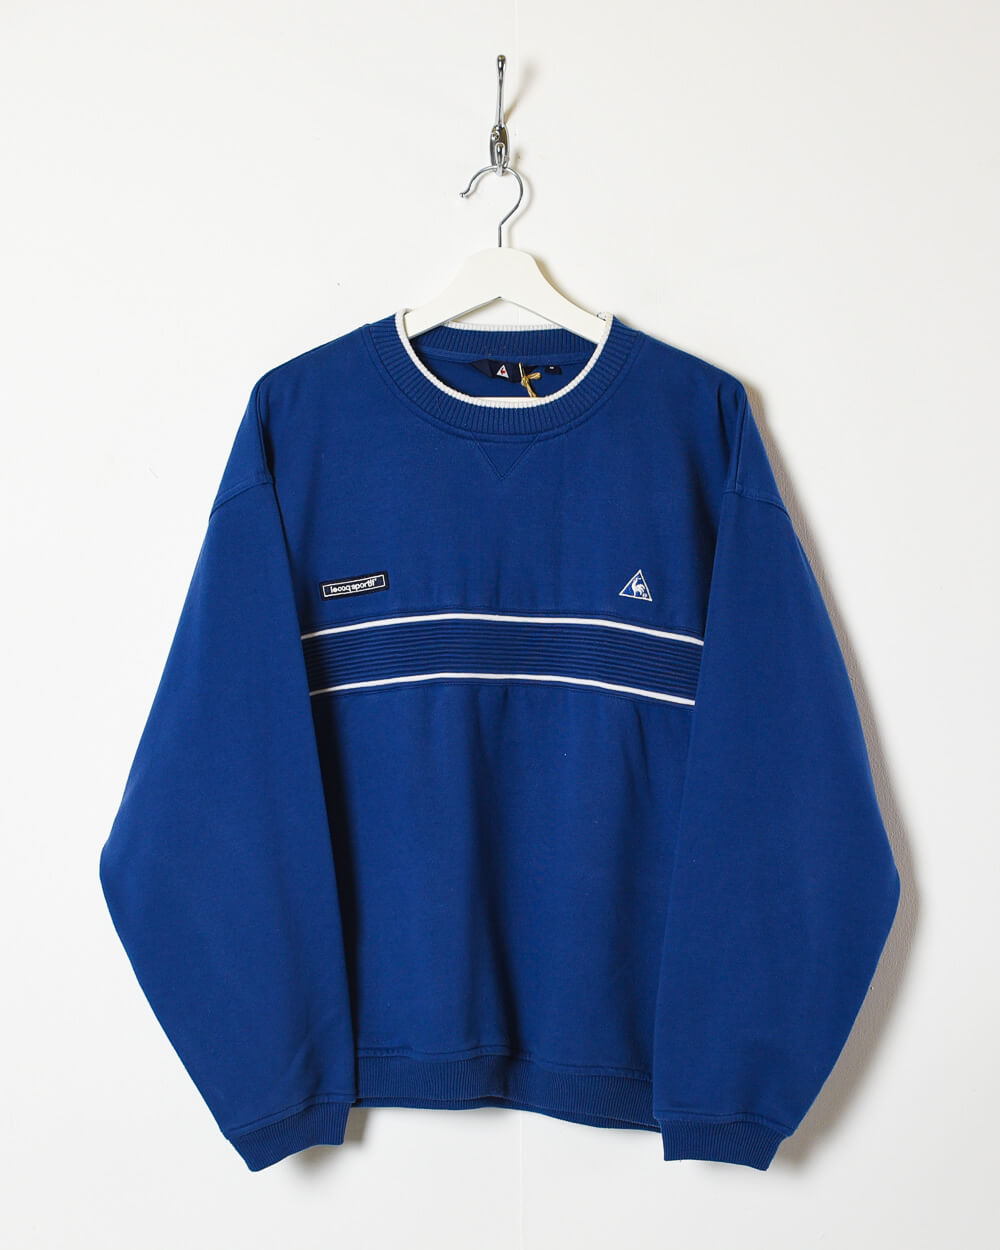 Navy Lecoq Sportif Sweatshirt - Small